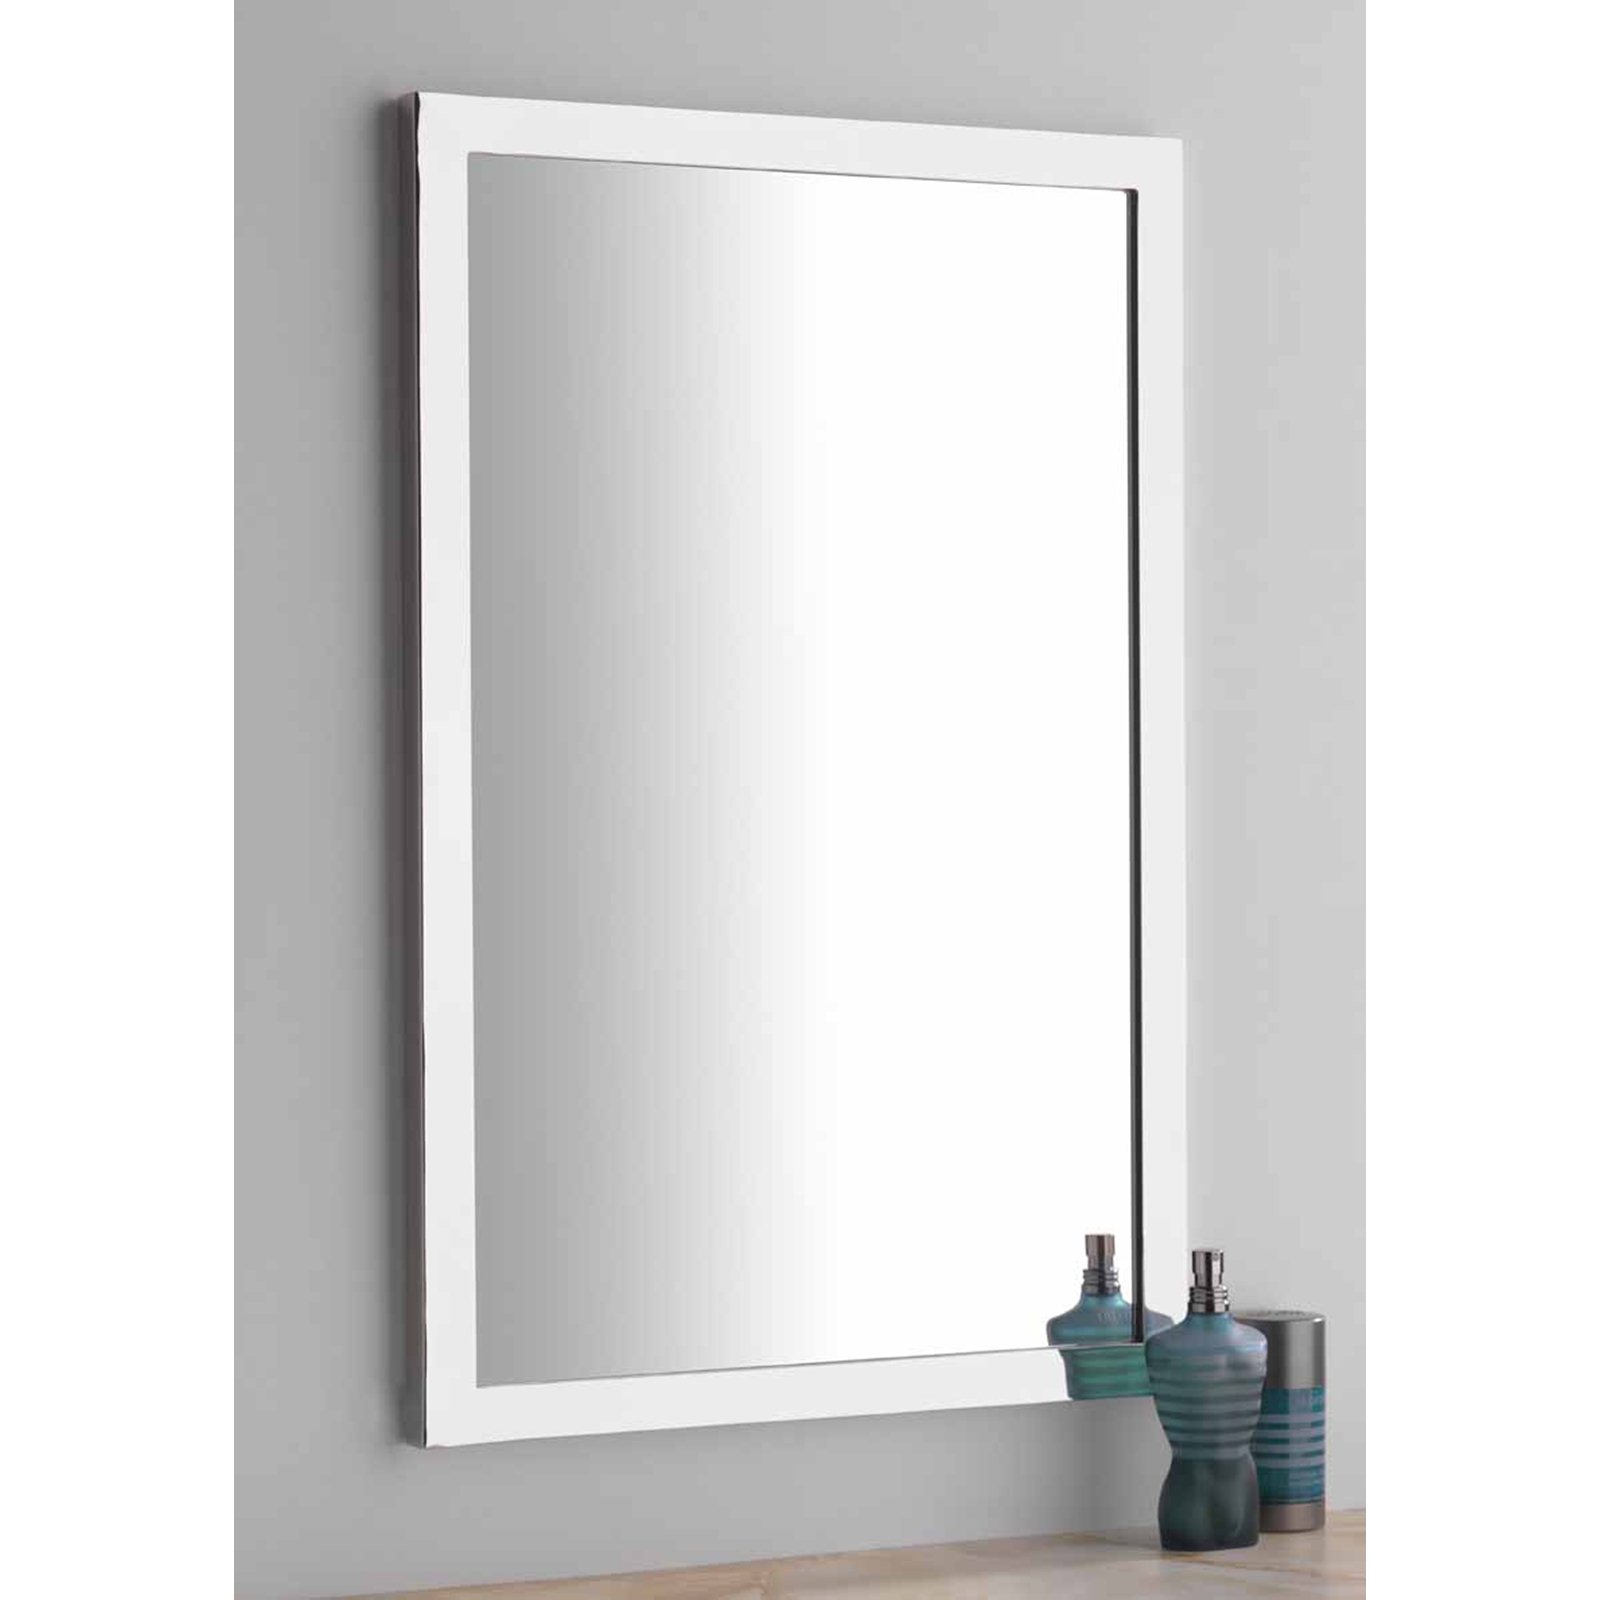 Rectangular Fixed Framed Mirror Image